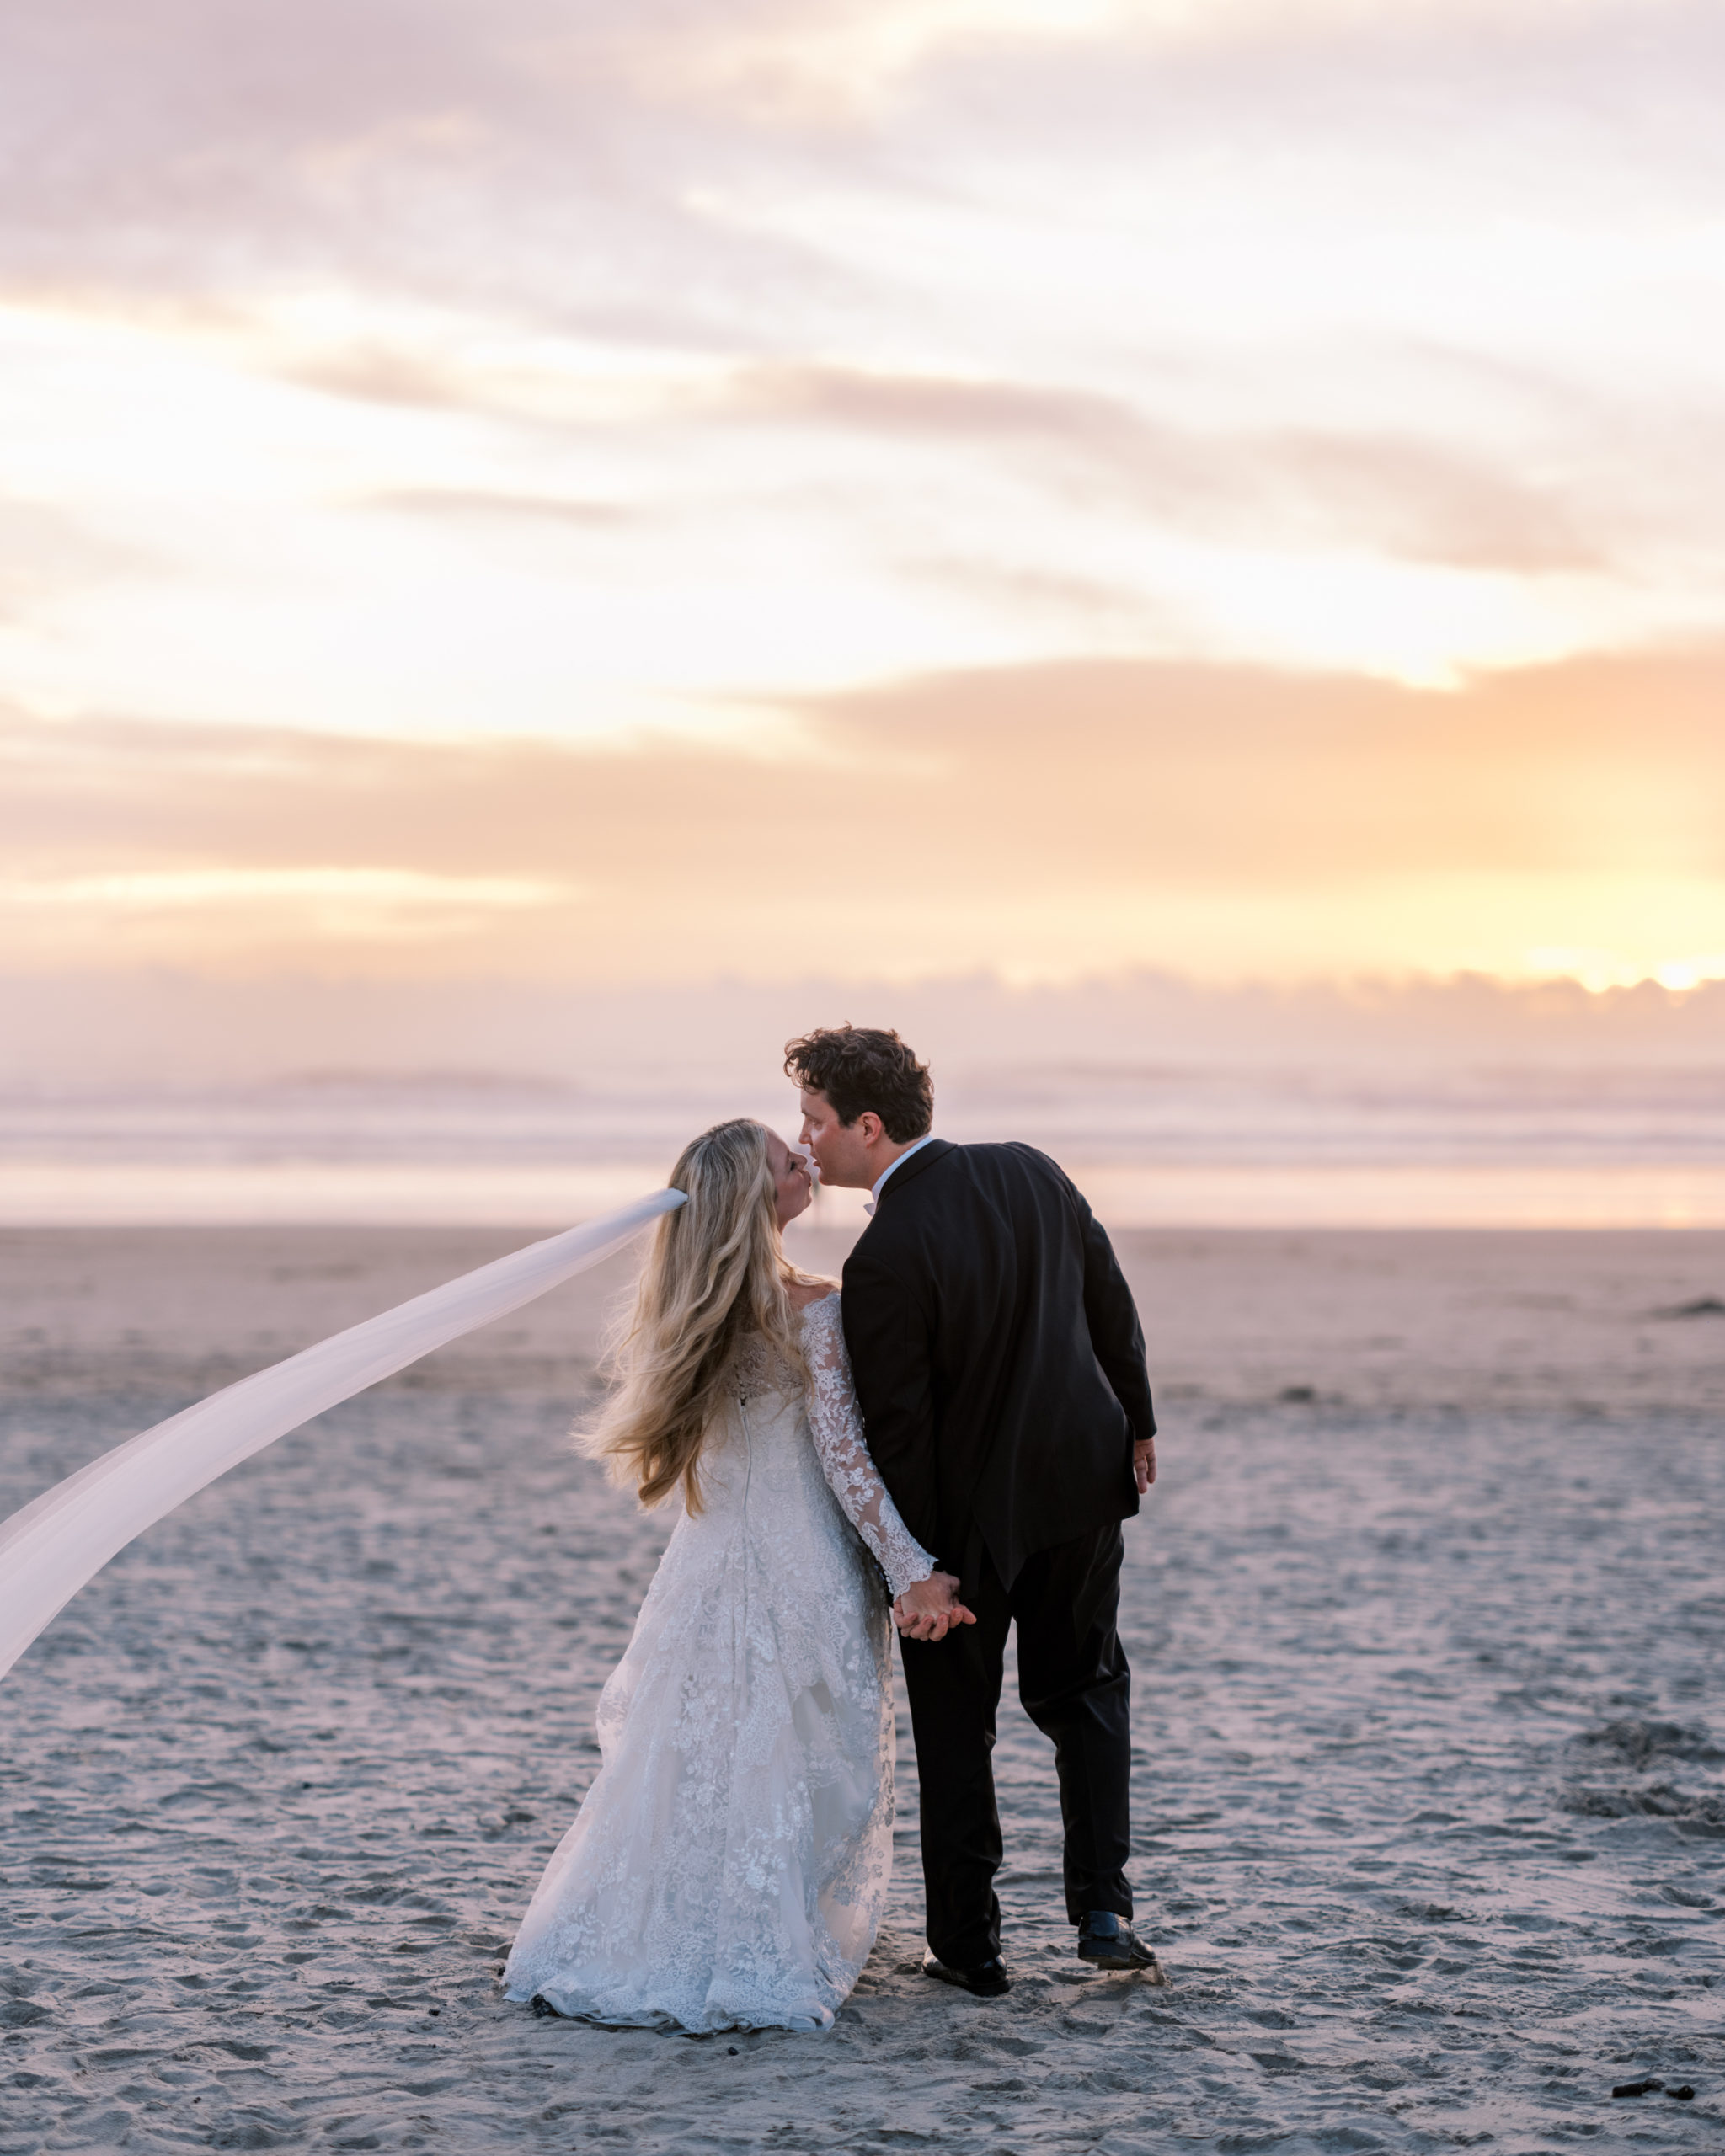 Cannon Beach Wedding - Sunset on beach September